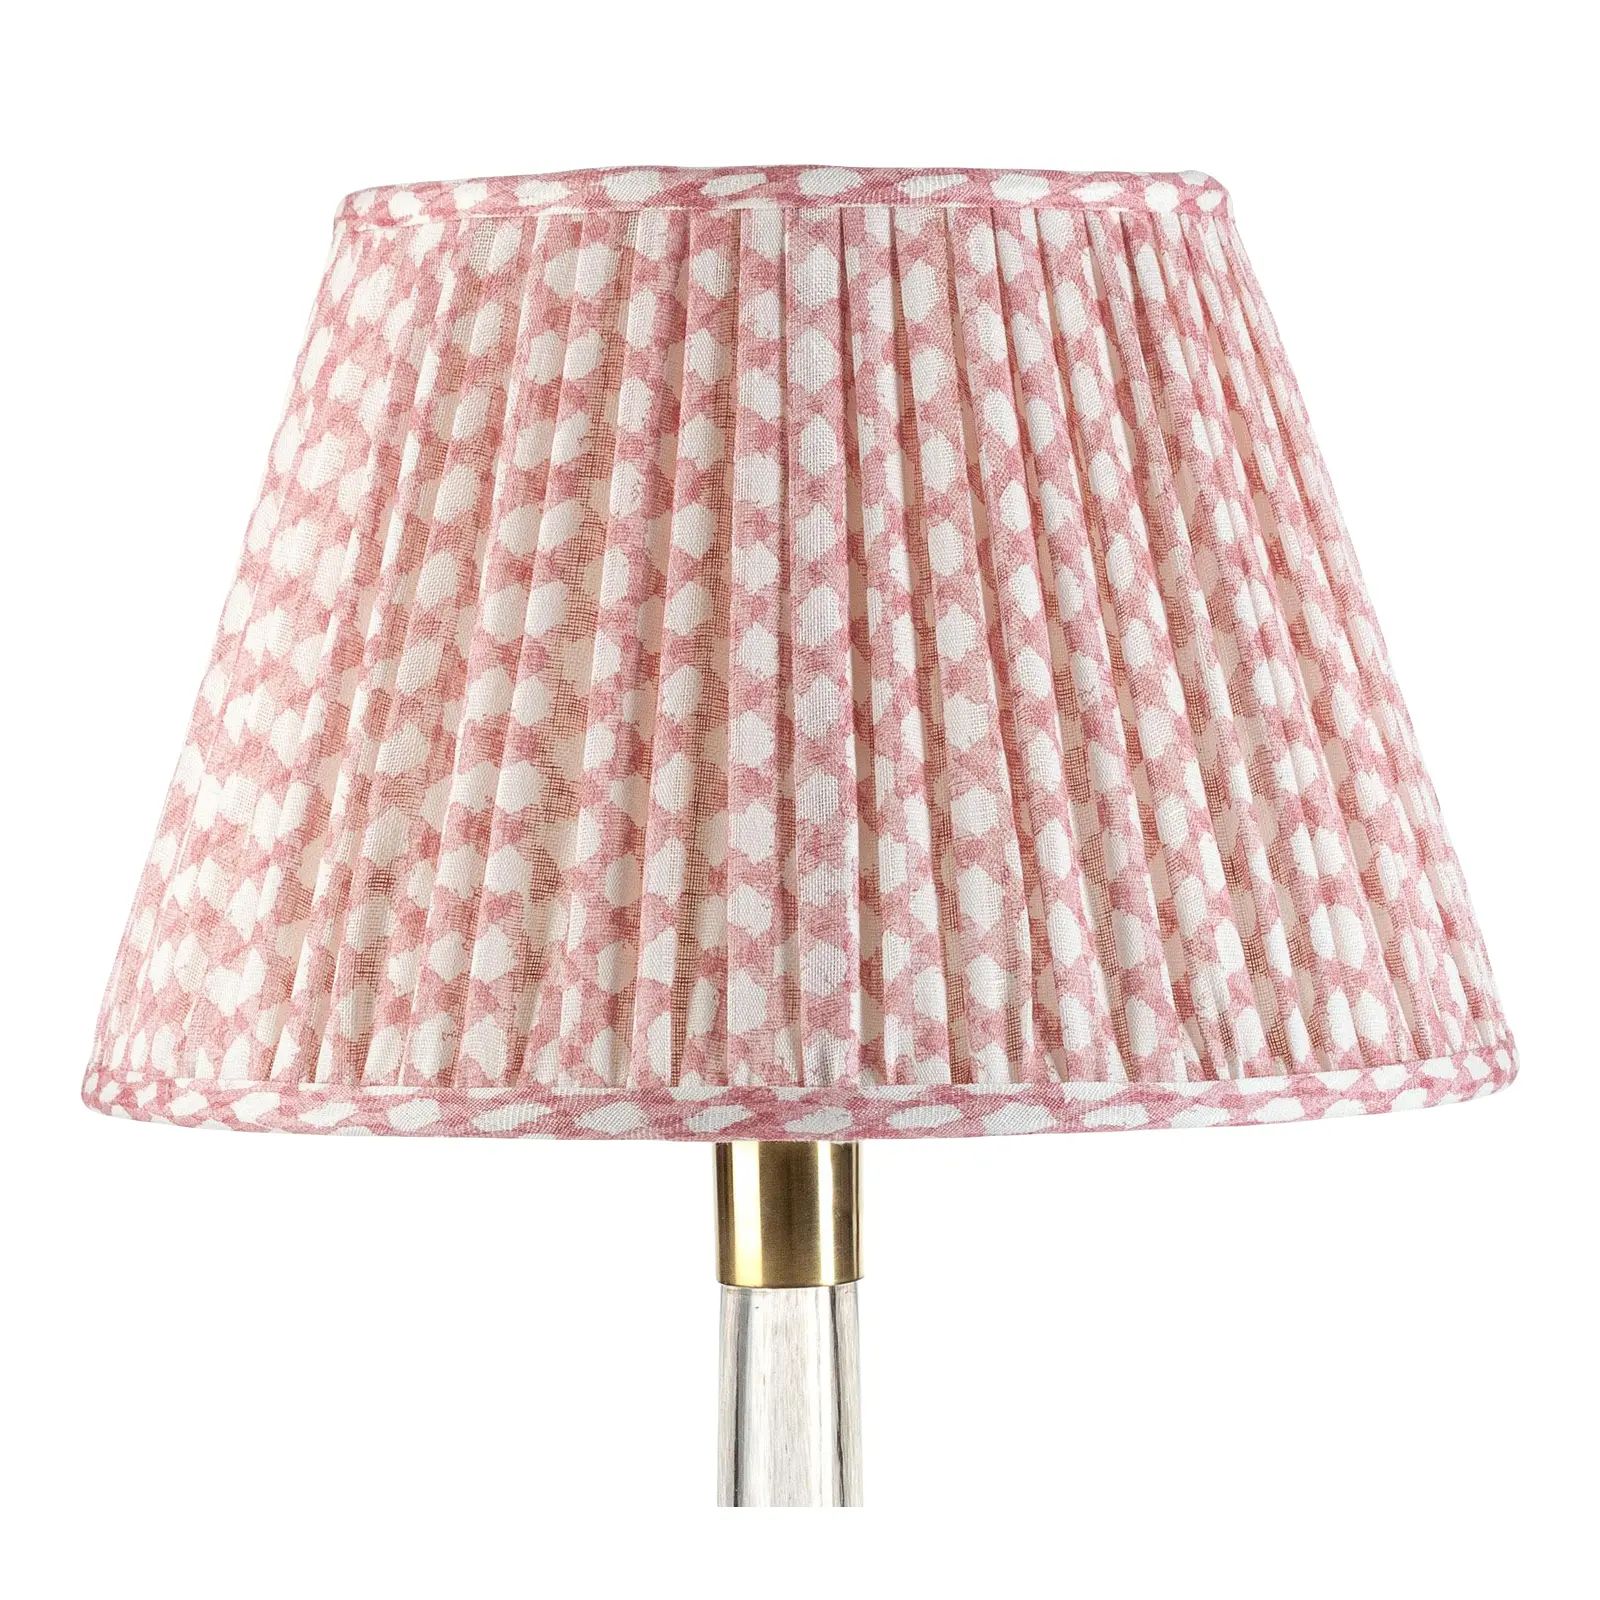 Fermoie Gathered Linen Lampshade in Pink Wicker, 18 Inch | Chairish